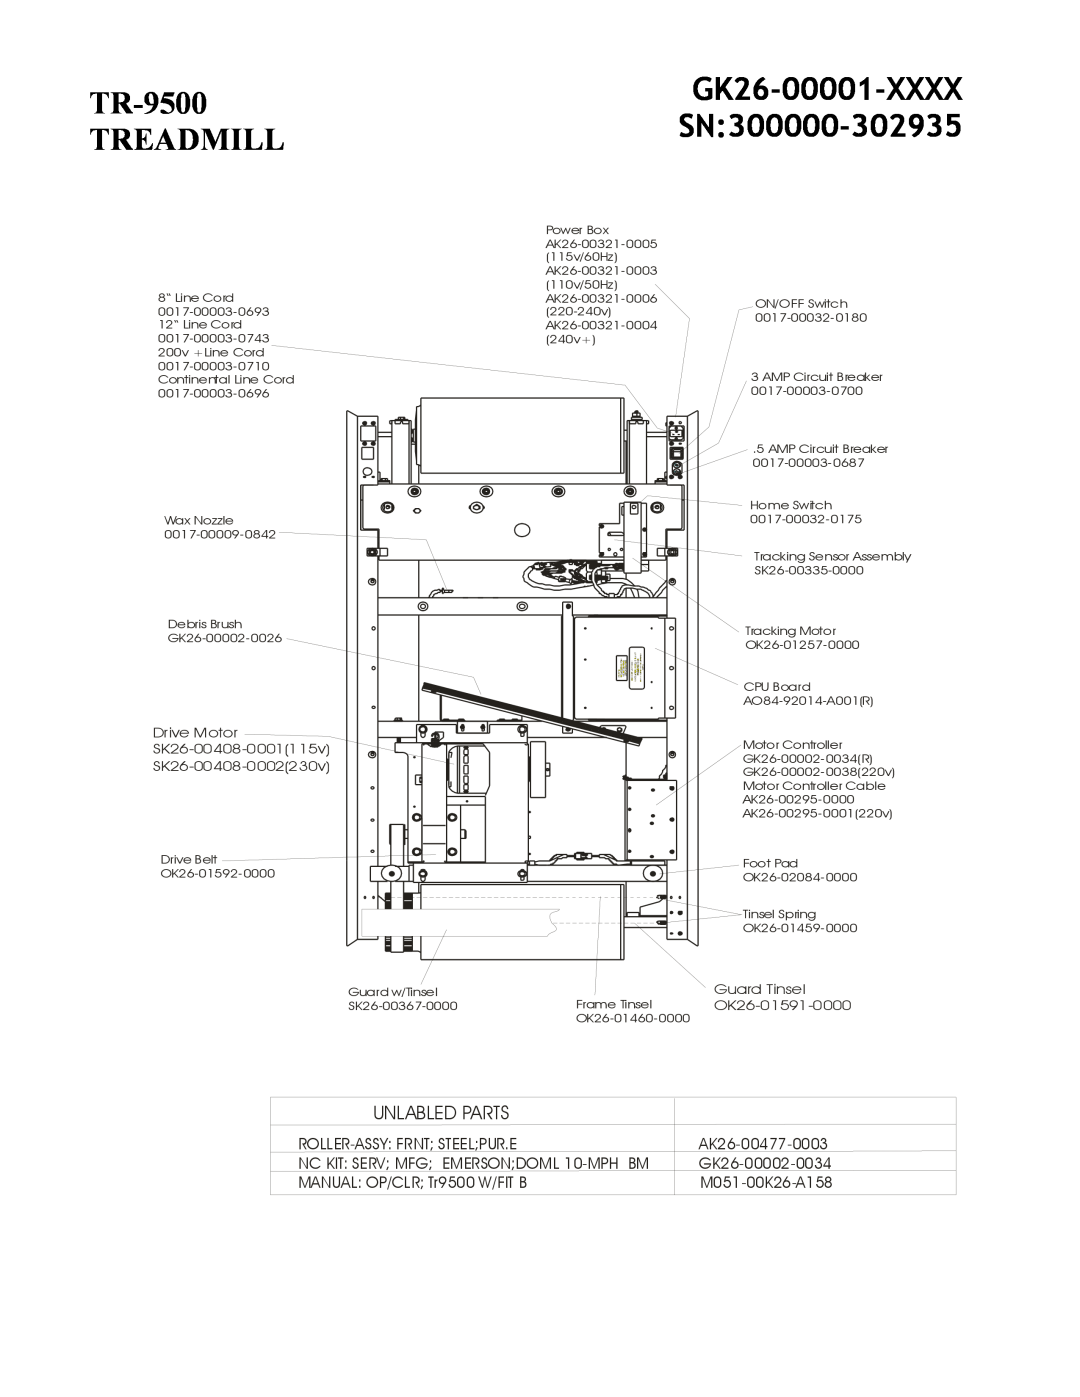 Life Fitness manual TR-9500 TREADMILL, GK26-00001-XXXX SN300000-302935, Unlabled Parts, Roller-Assy Frnt Steelpur.E 